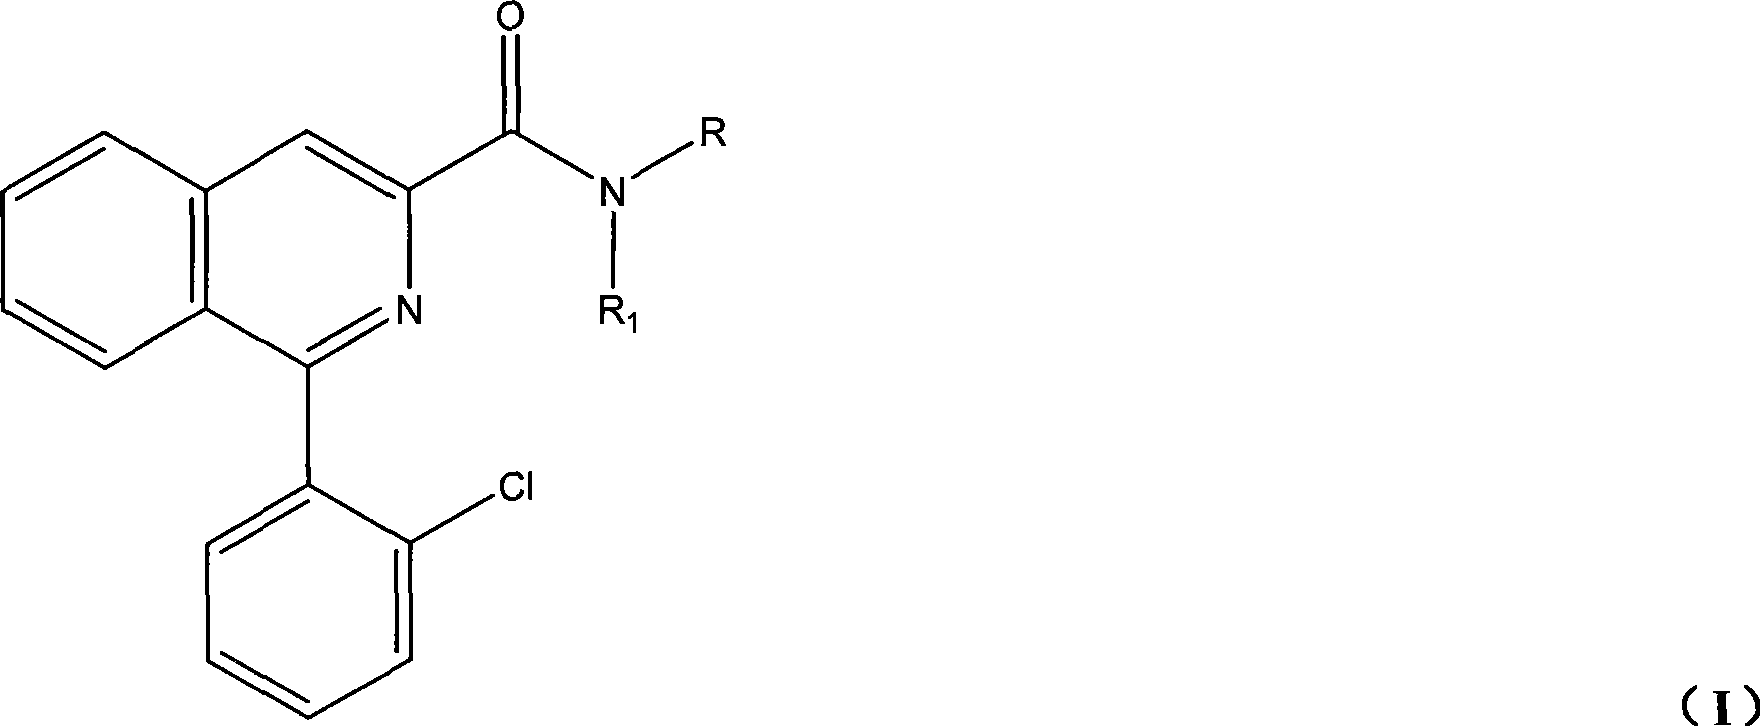 Synthesis of PET imaging agent prosome isoquinoline methanamide derivant